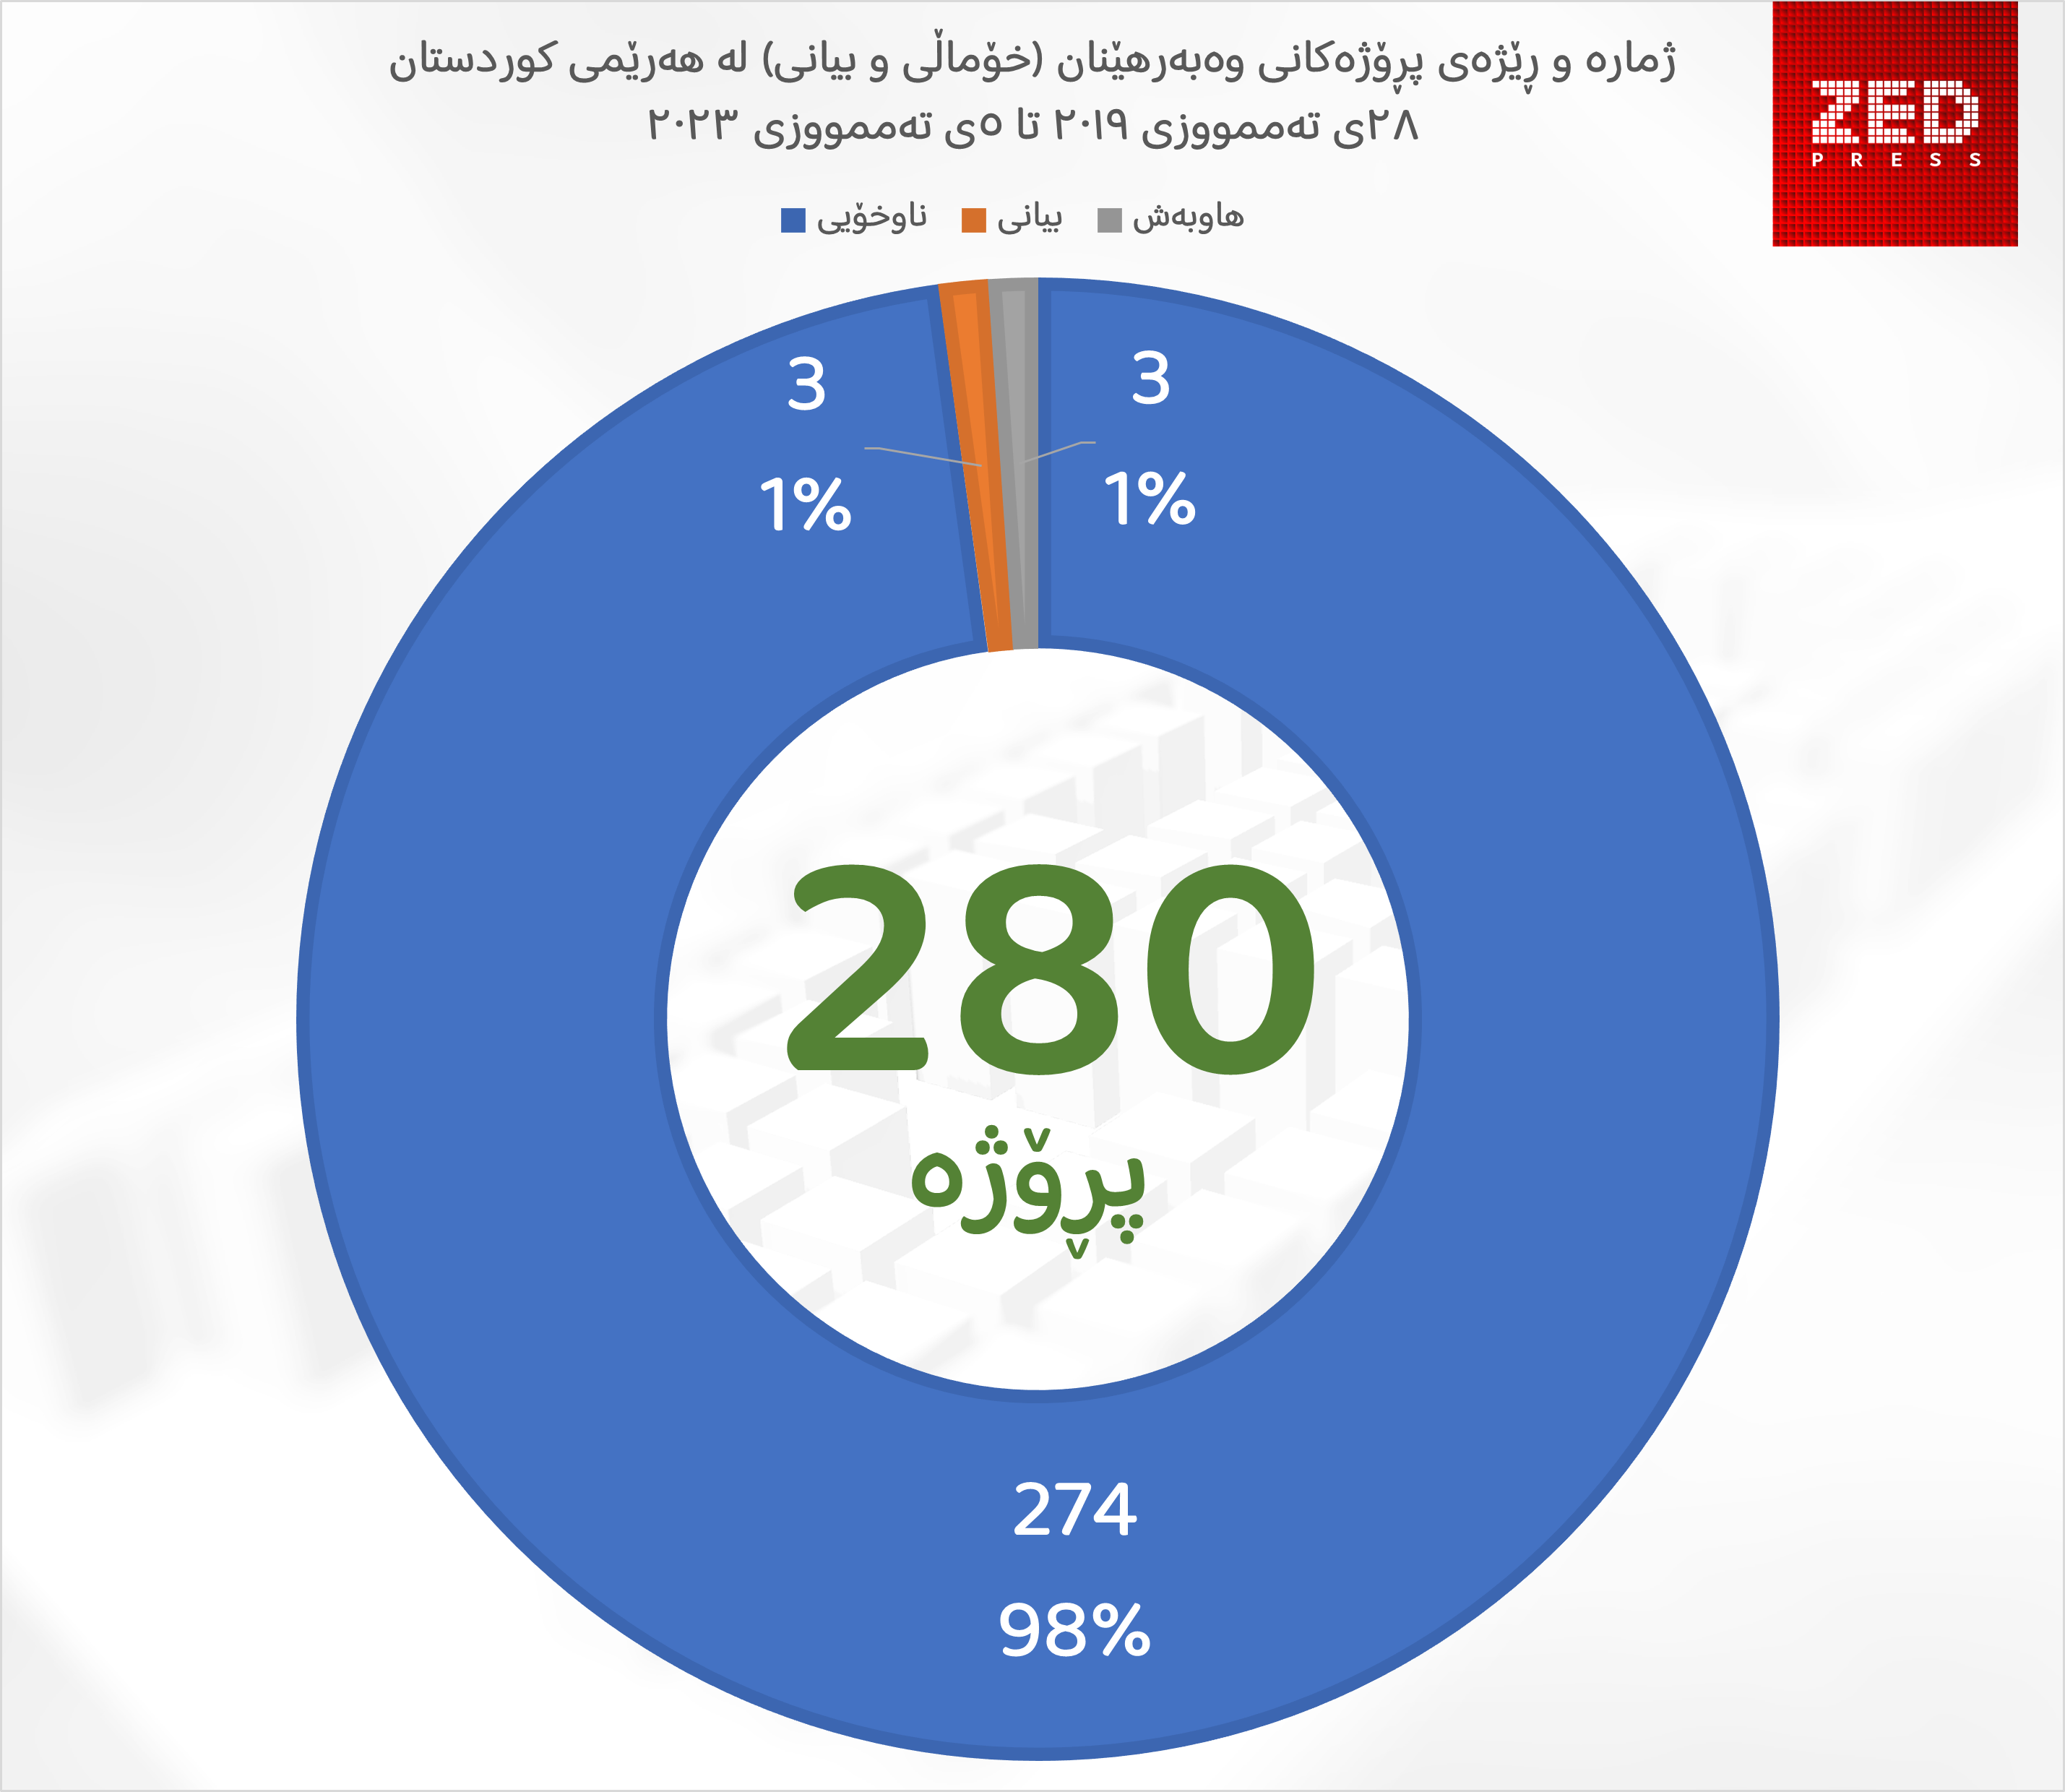 Zed Press Charts Invest 2023 inout ژماره‌ و ڕێژه‌ی پڕۆژه‌كانی وه‌به‌رهێنان (خۆماڵی و بیانی) له‌ هه‌رێمی كوردستان
٢٨ى تەممووزى ٢٠١٩ تا ٥ى تەممووزی ٢٠٢٣
 زێدپرێس گرافیك